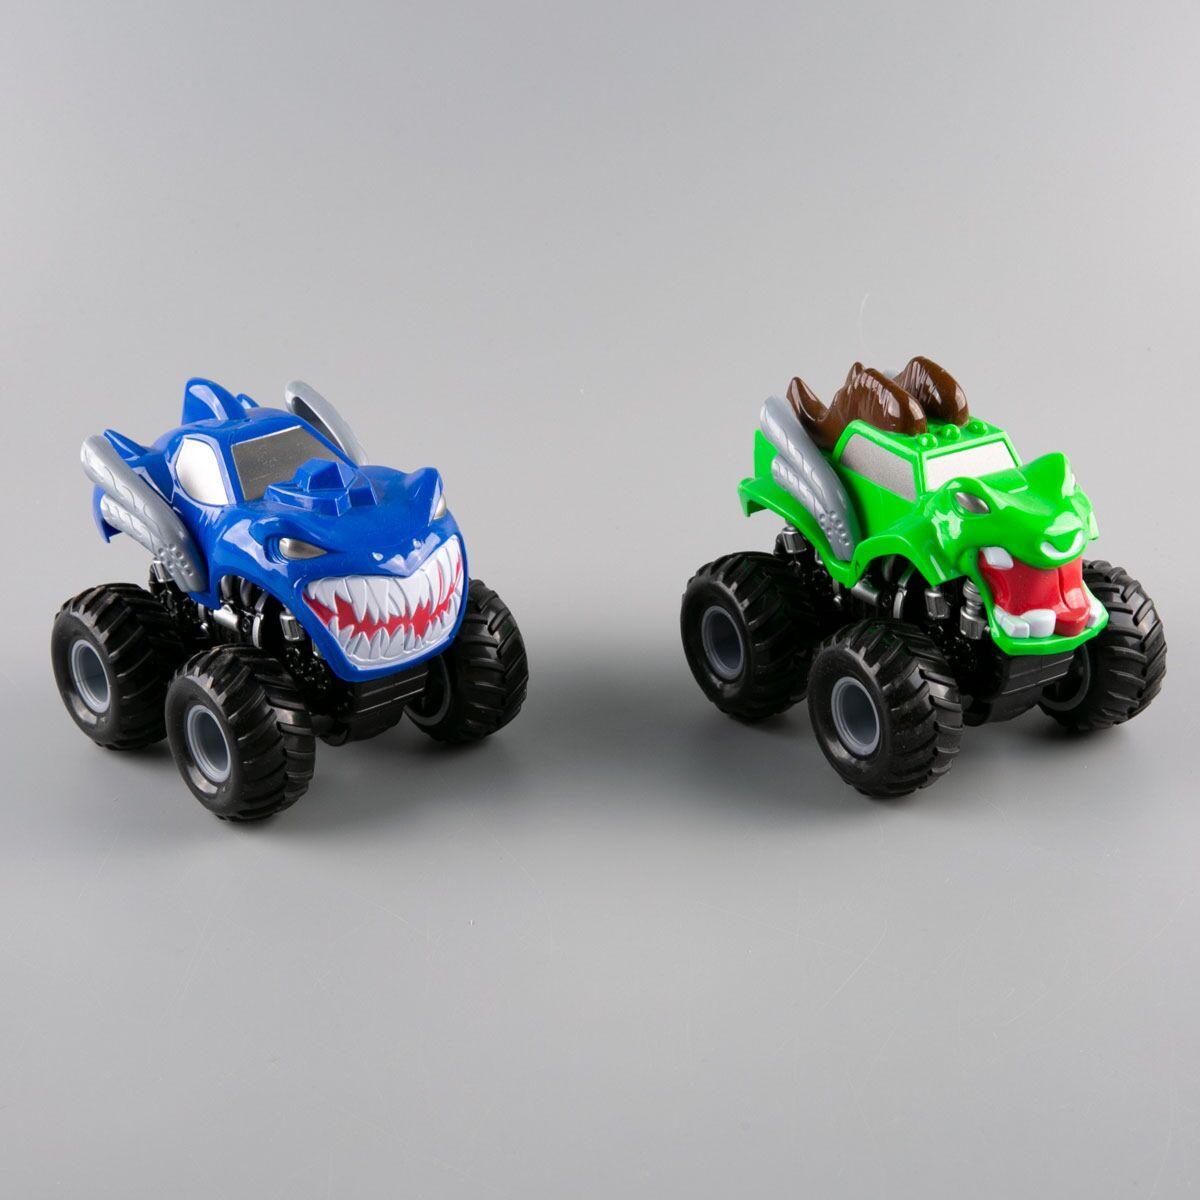 Monster SUV: Игровой набор 2 Машинки MONSTER SUV, на н/б, синий-зеленый, фото 1